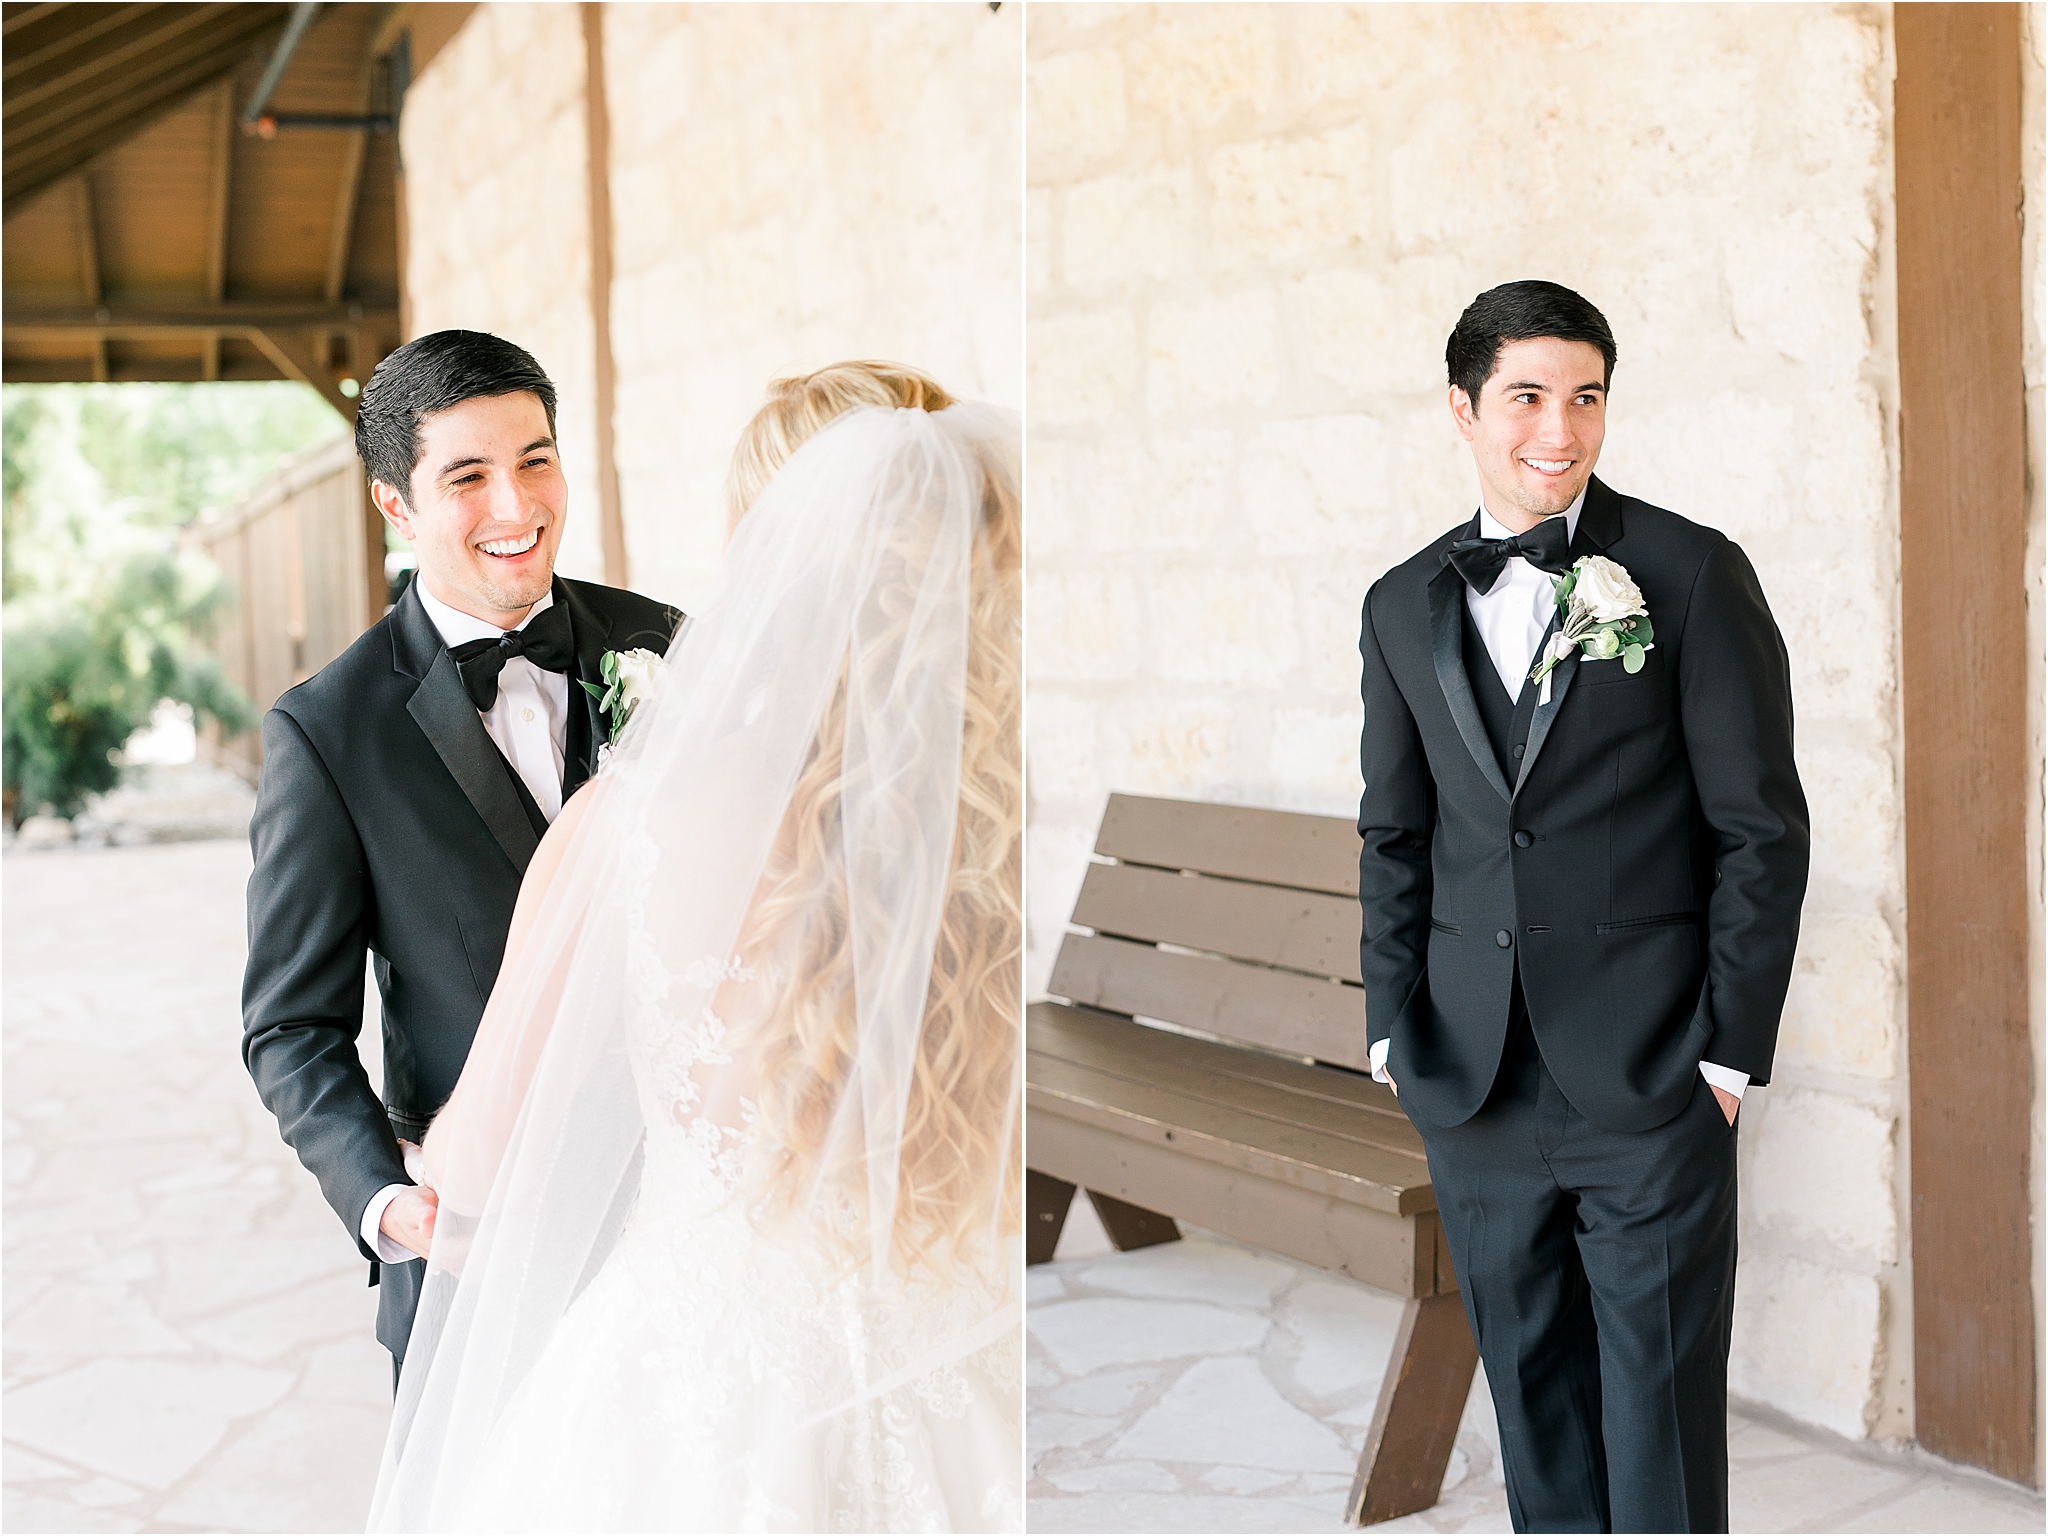  First look at The Springs McKinney Wedding by Dallas Wedding Photographer Jillian Hogan